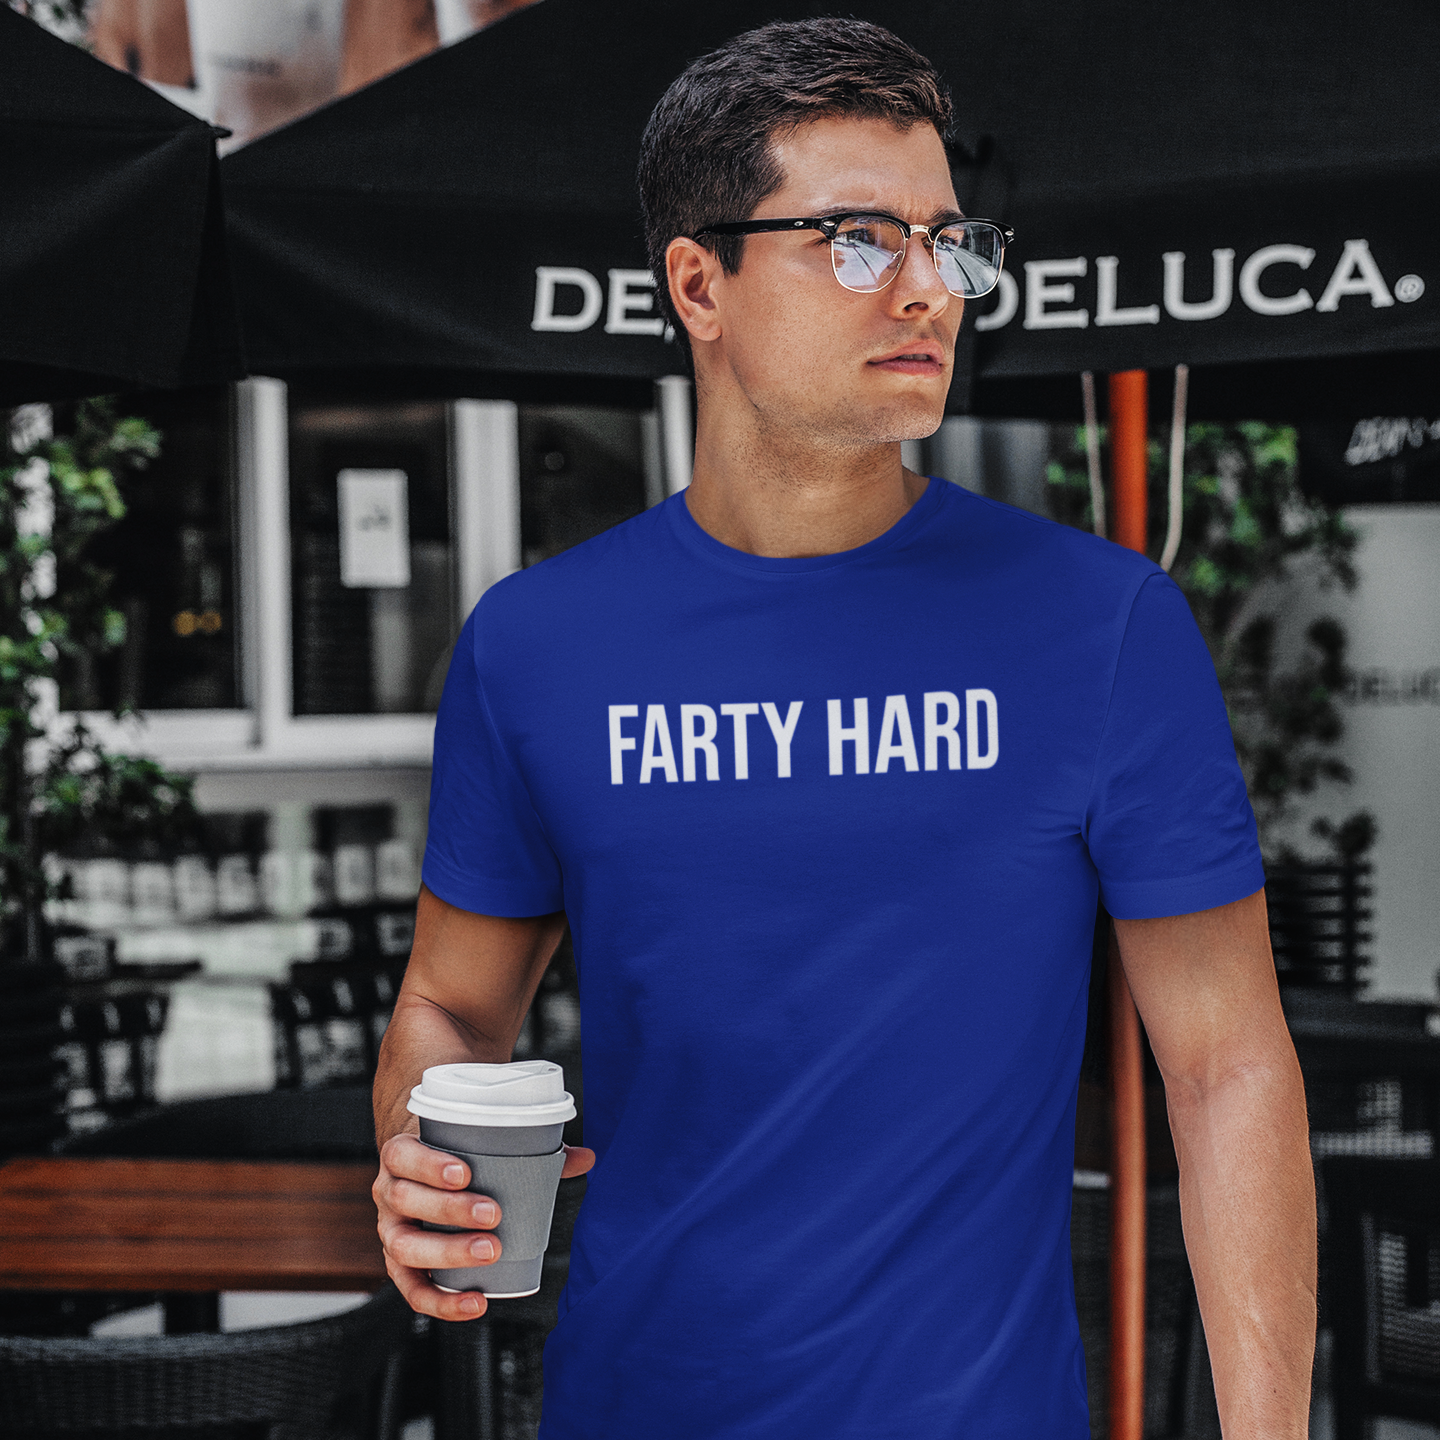 'Farty hard' adult shirt